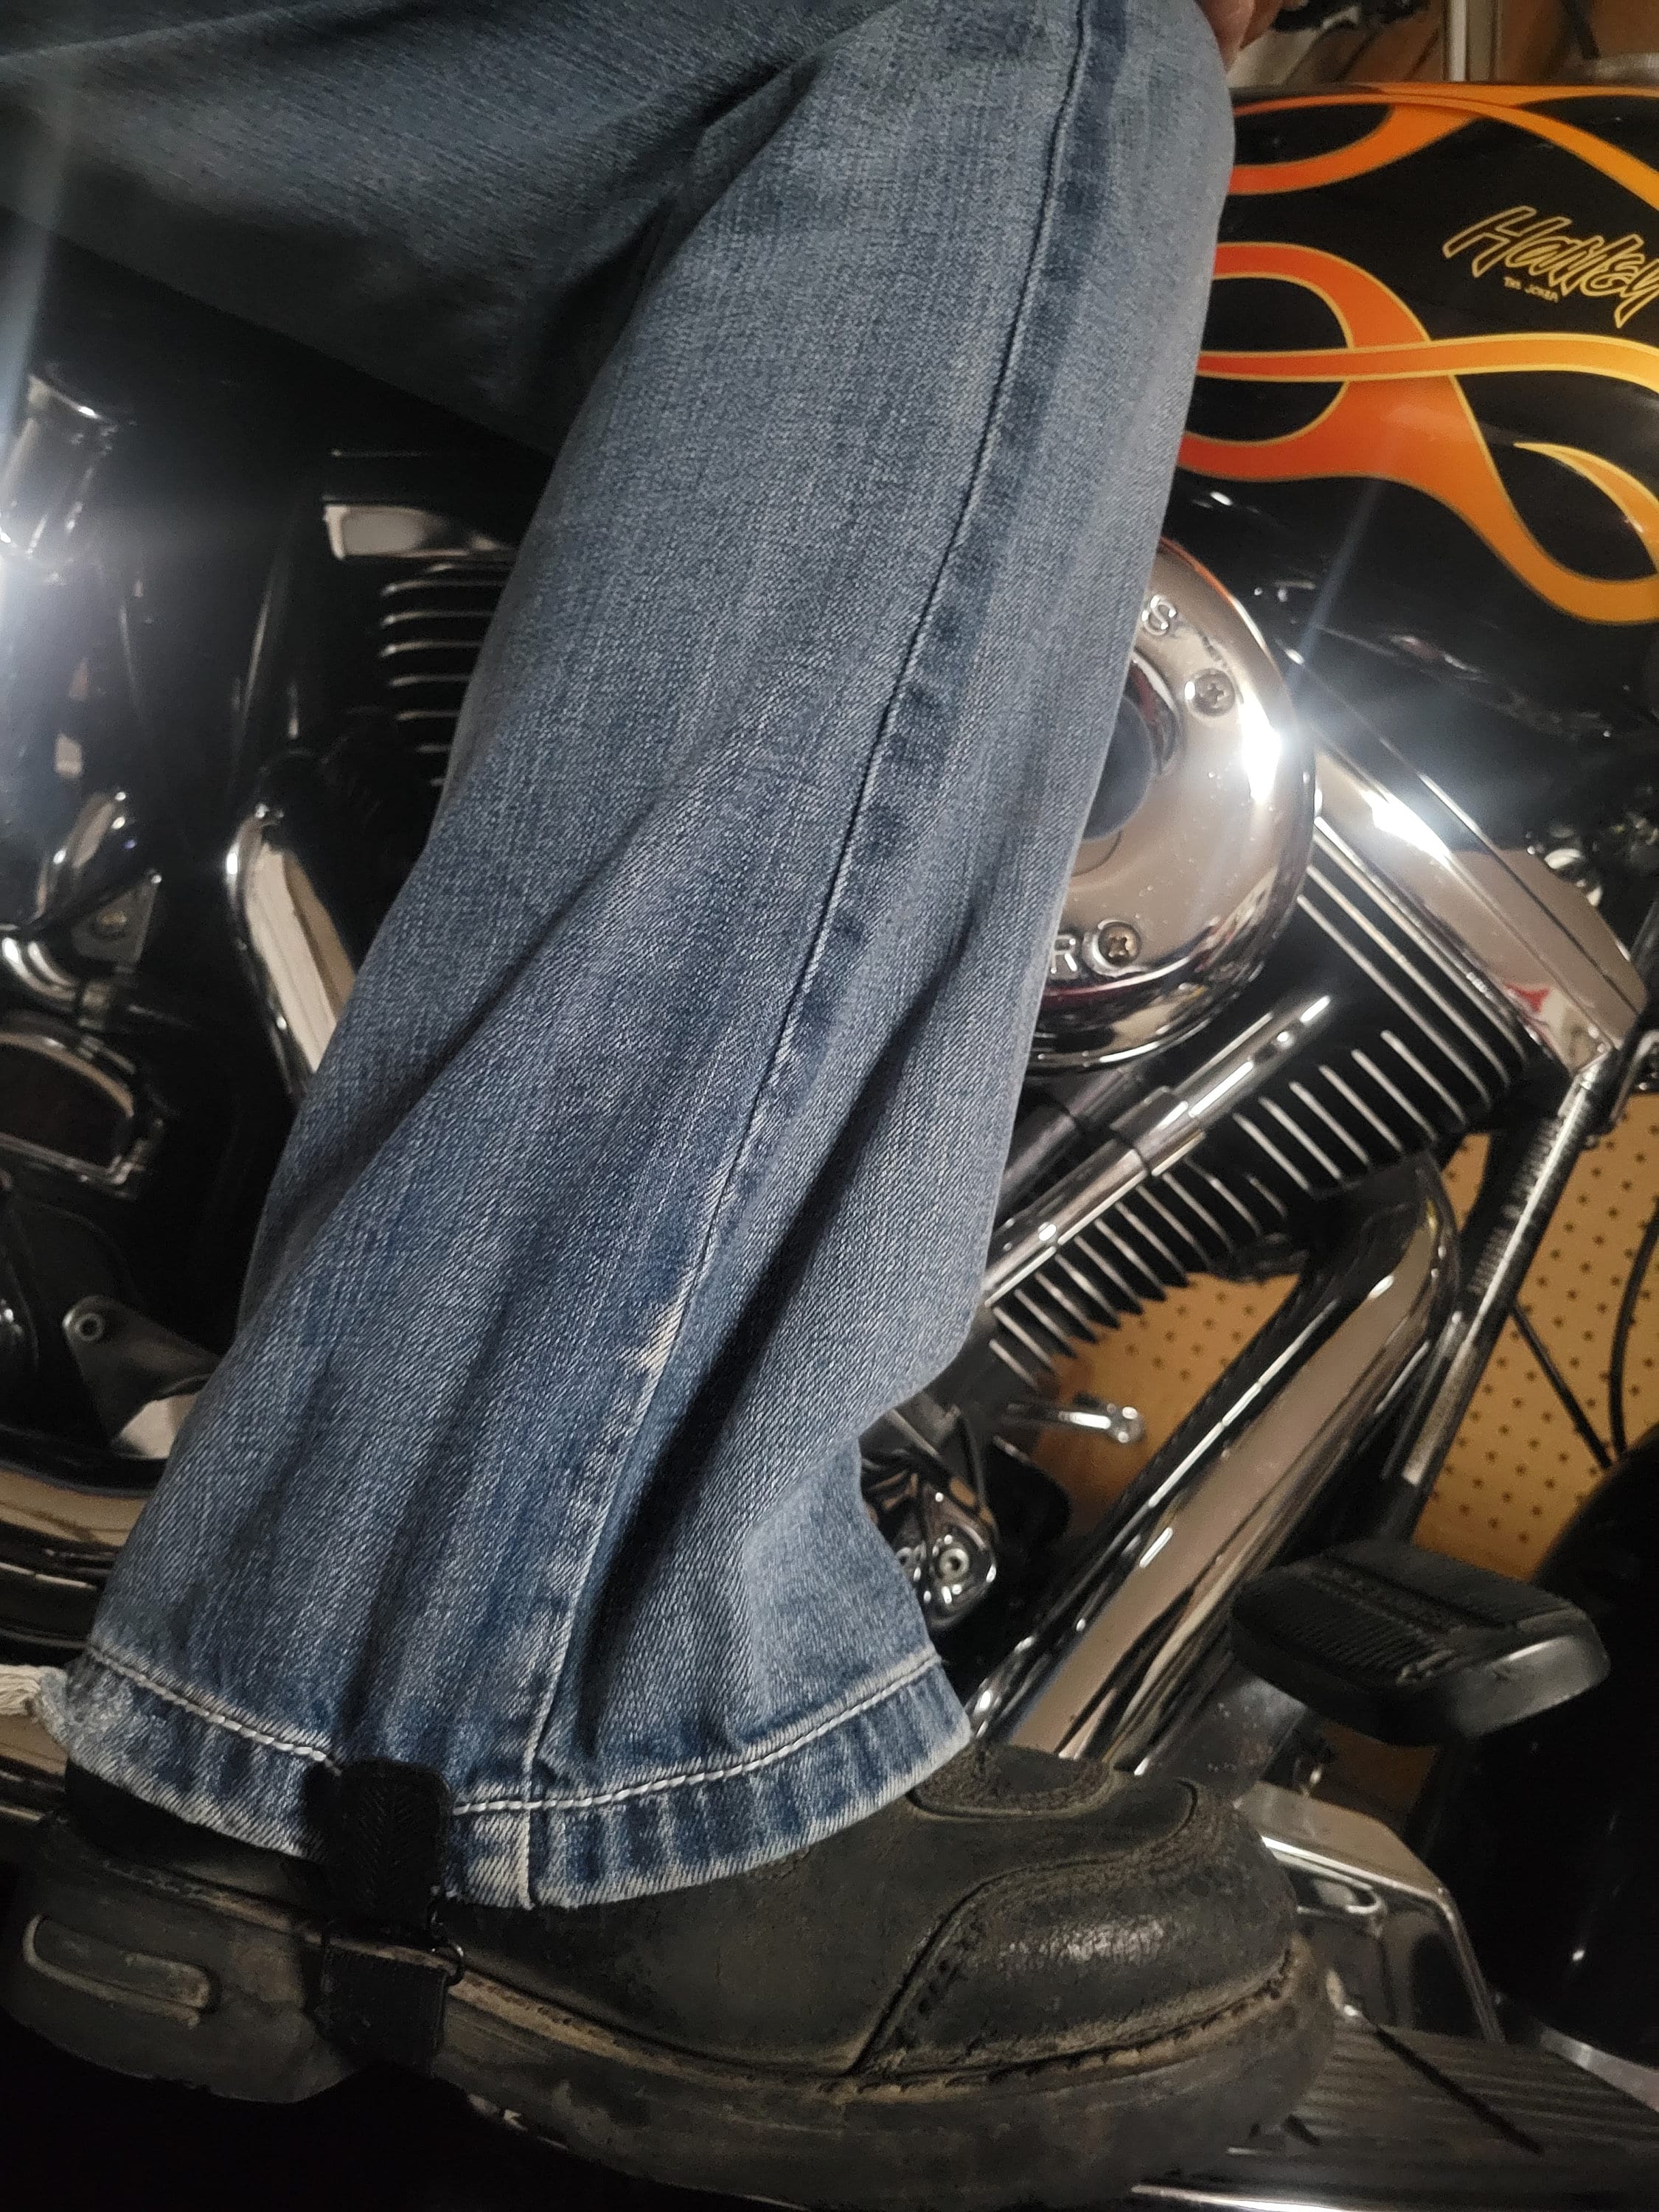 shubanditcompanyllc Biker Motorcycle Pant Leg Clamps Straps Clips Holder  Rider Stirrups Fully Adjustable Pants Clip Holders